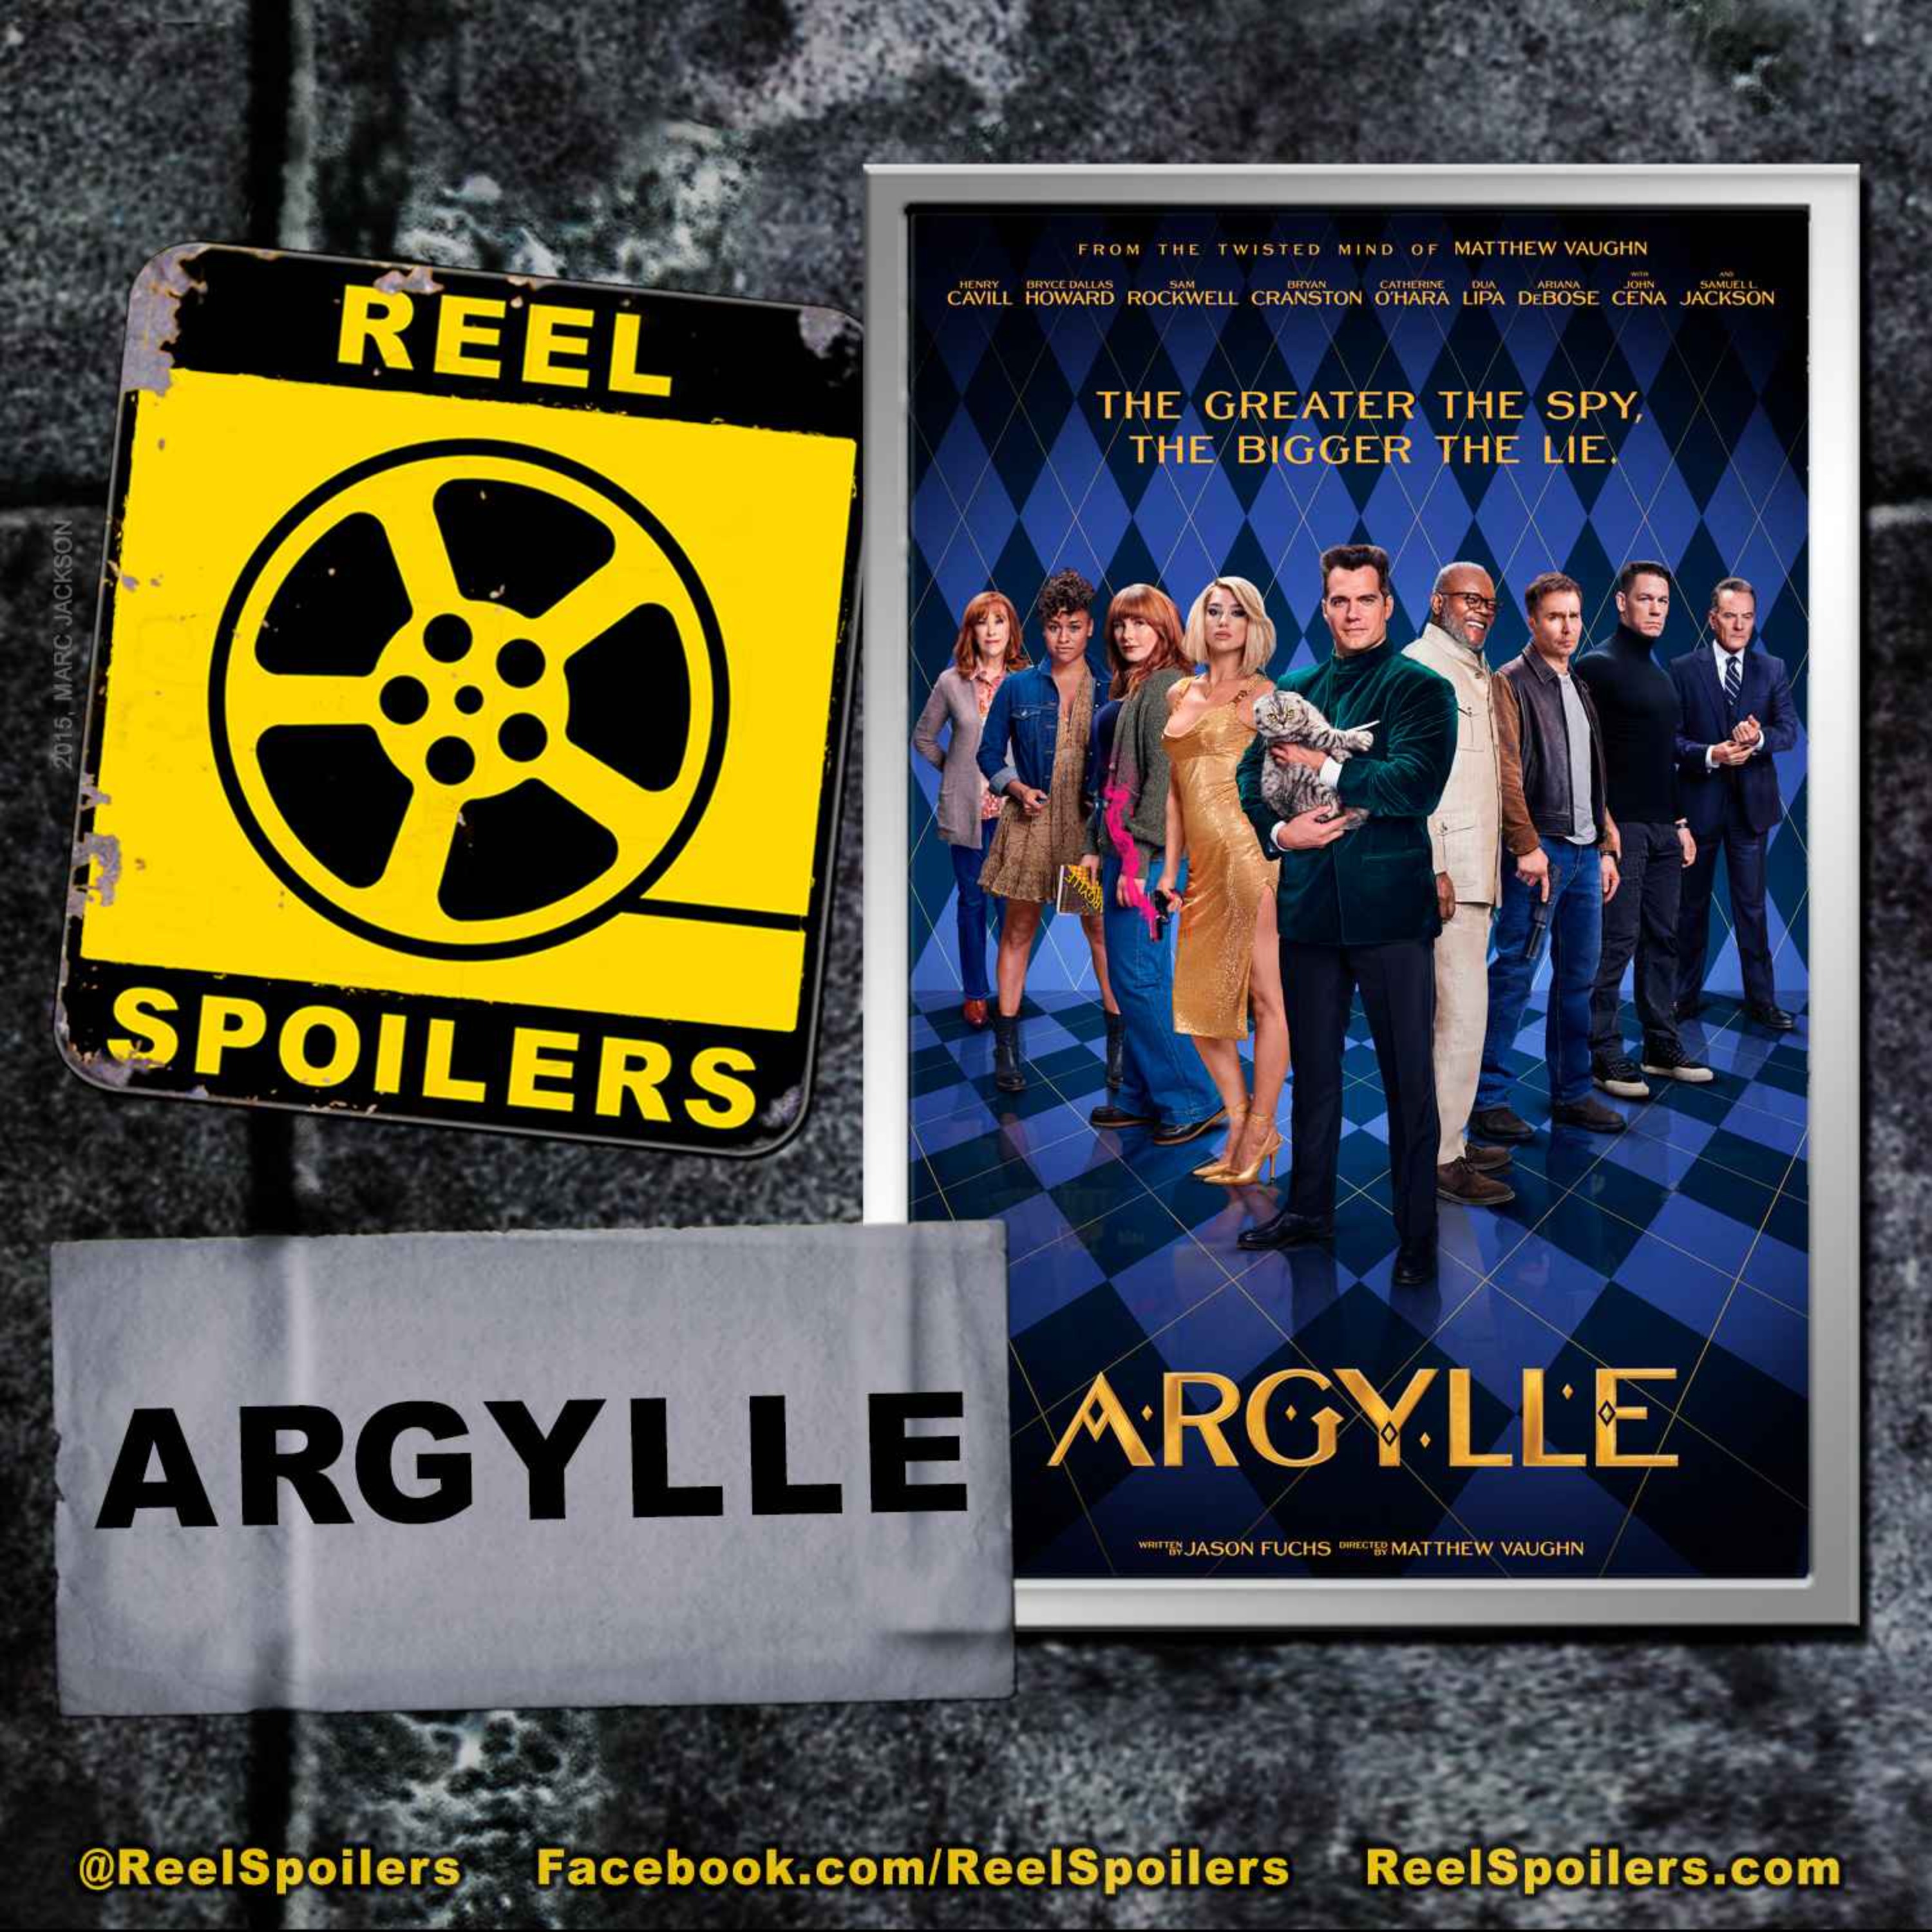 ARGYLLE Starring Henry Cavill, Bryce Dallas Howard, Sam Rockwell, Bryan Cranston